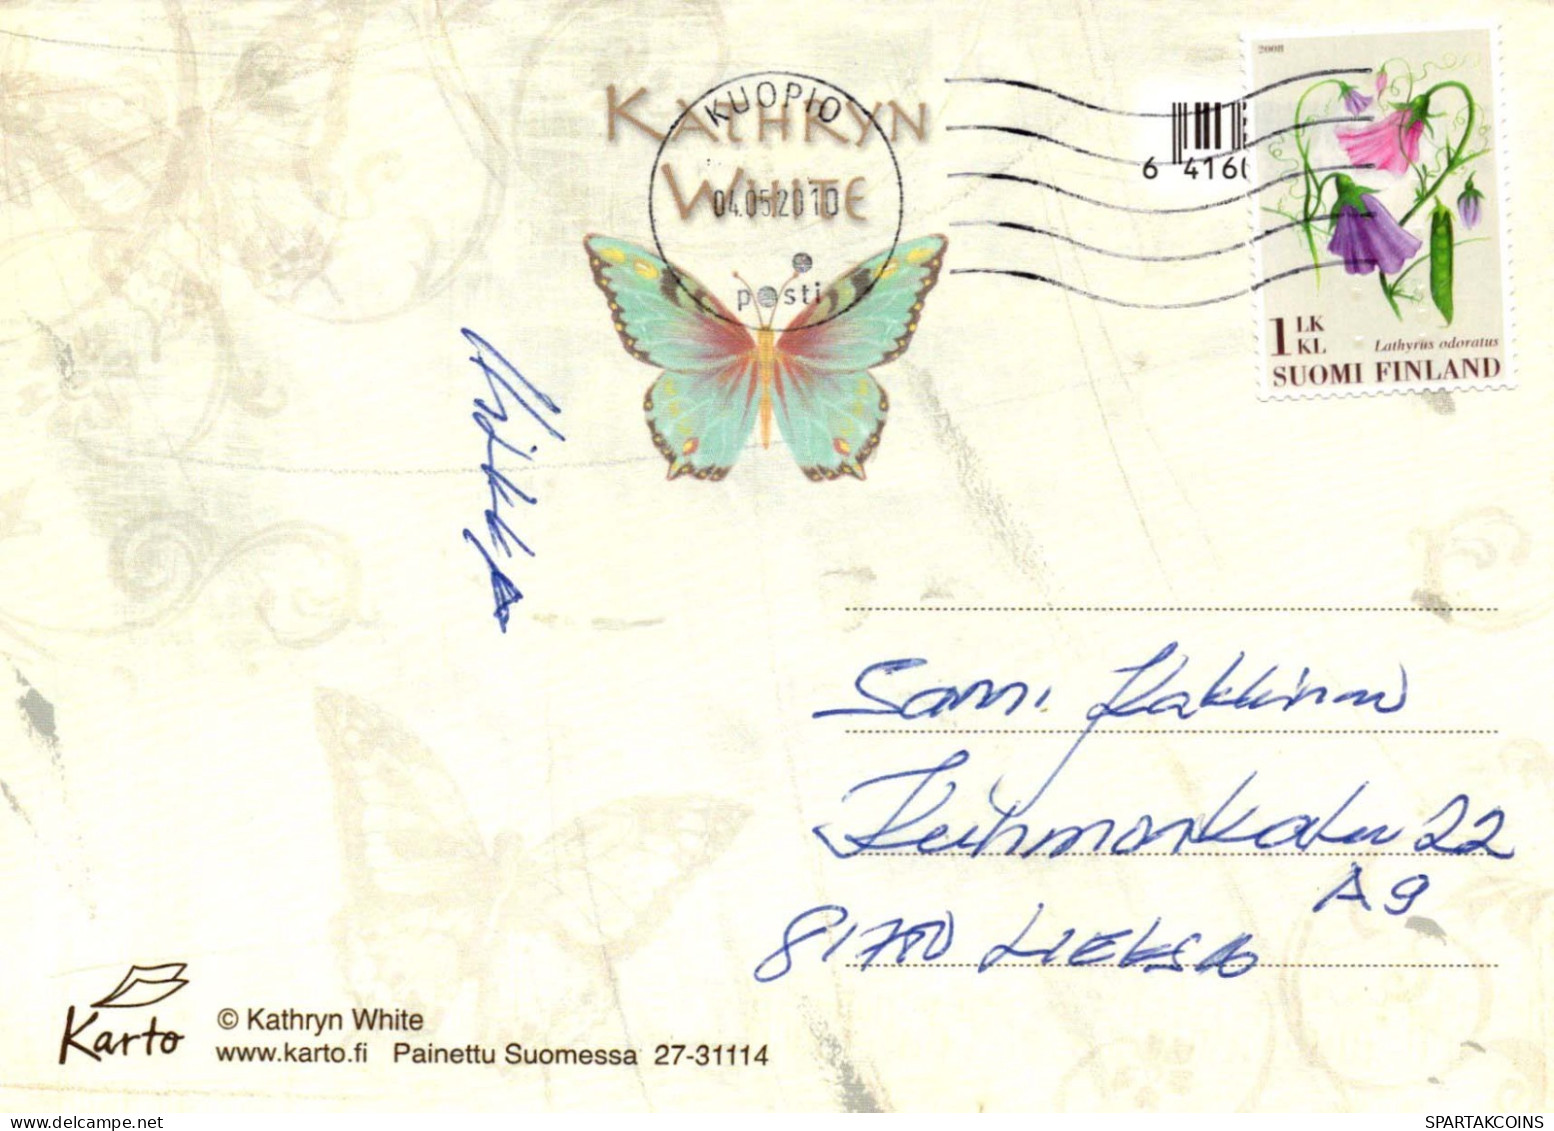 SCHMETTERLINGE Tier Vintage Ansichtskarte Postkarte CPSM #PBS441.DE - Butterflies